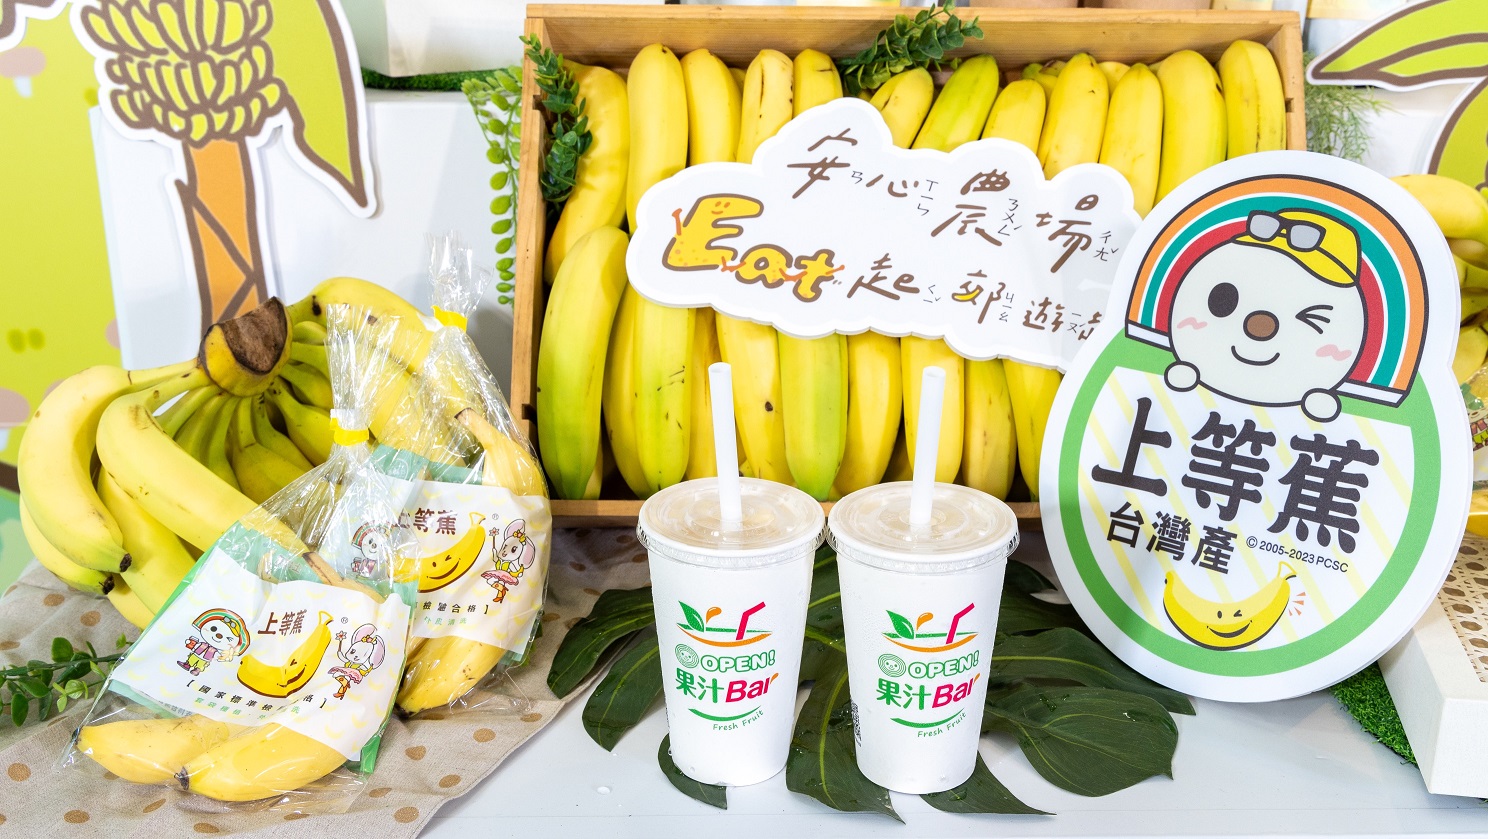 02.7-ELEVEN自2010年開始販售「上等蕉」，平均每年可賣出超過千萬根香蕉，相當於香蕉外銷出口總量1.6倍.jpg